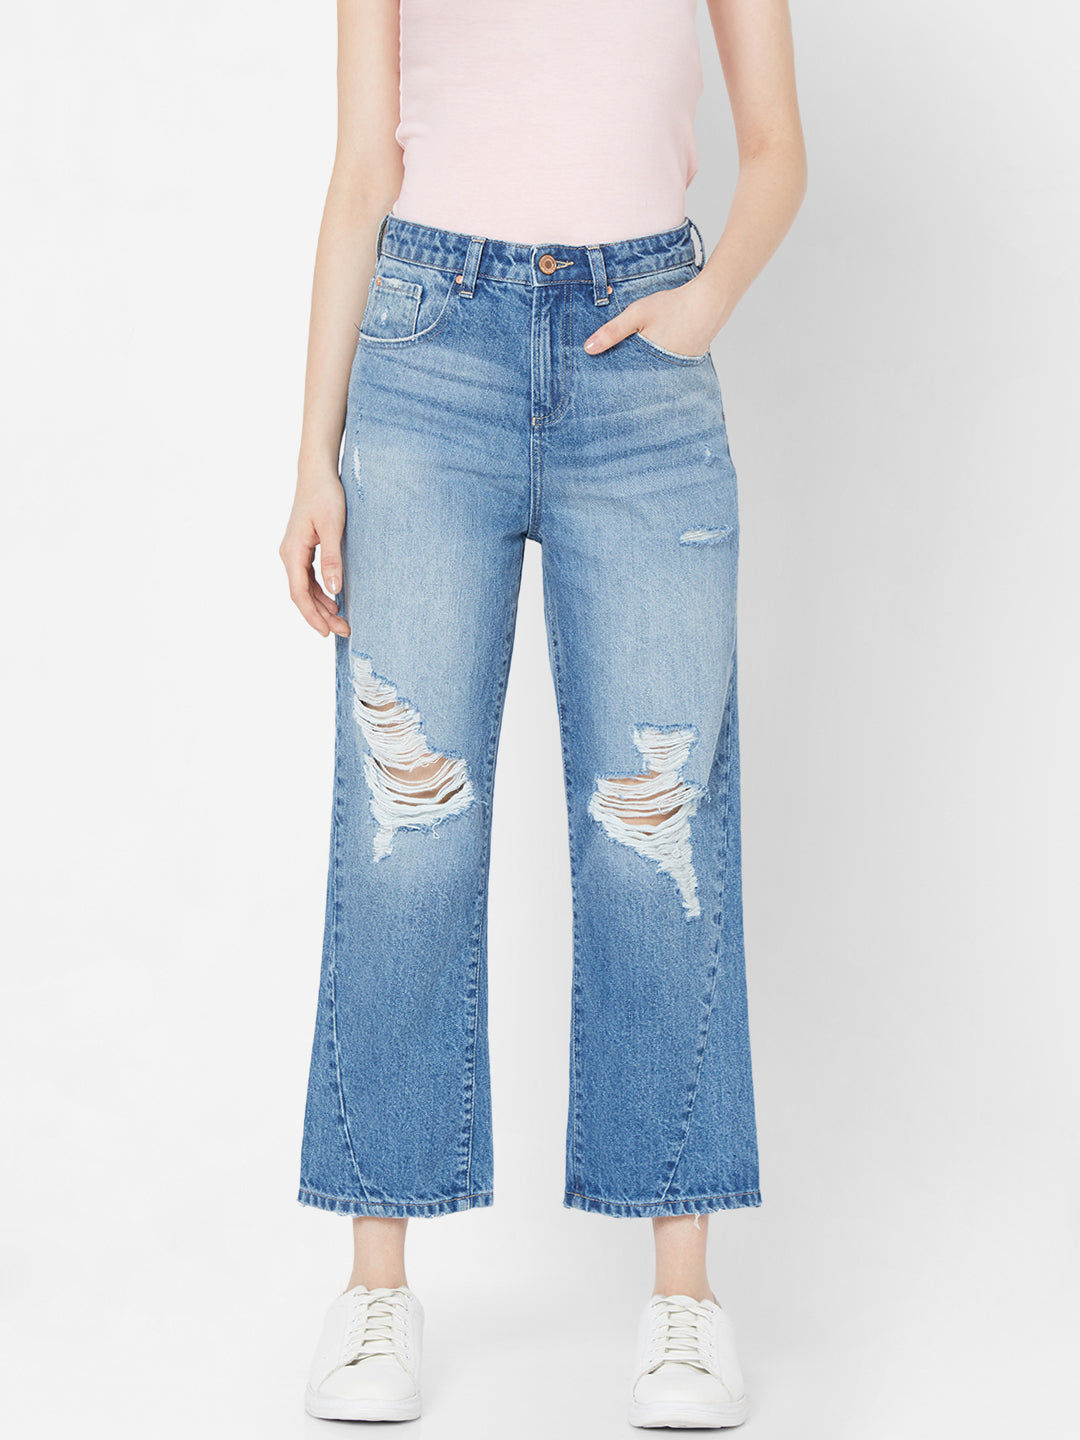 Spykar Women Blue Cotton Skinny Fit Regular Length Jeans (YNR)